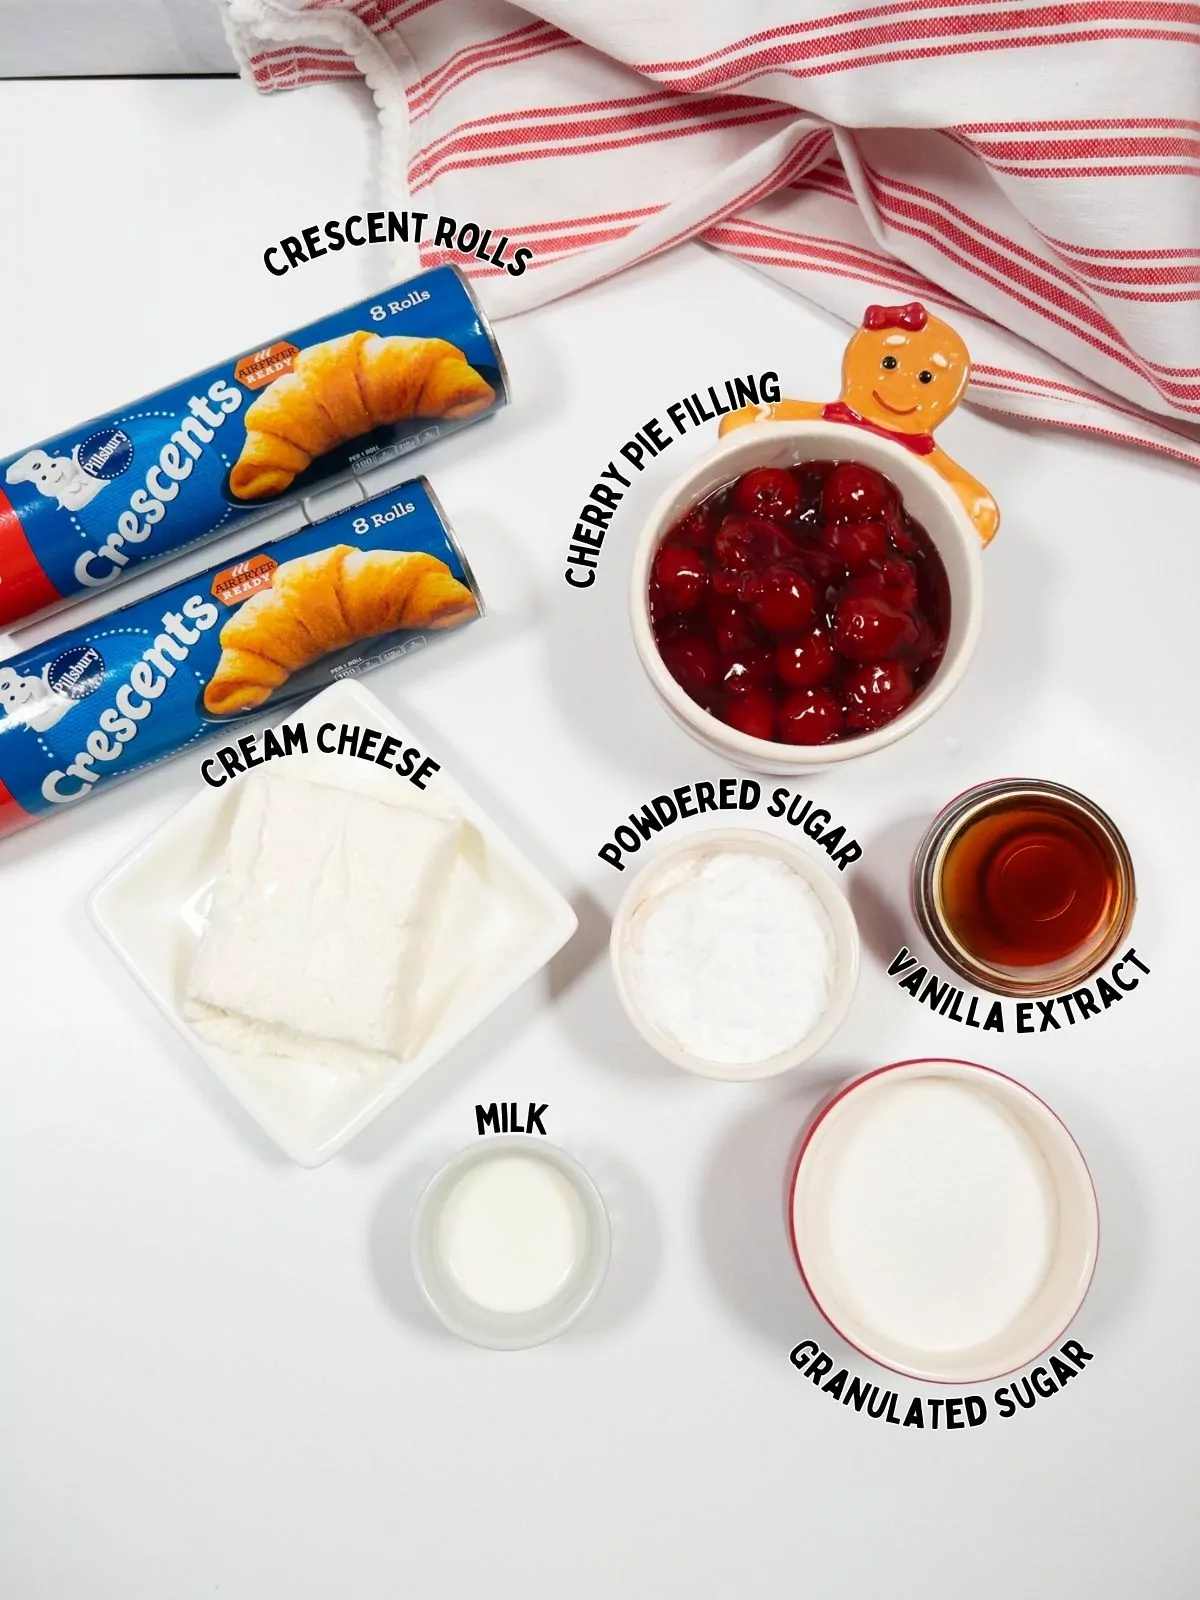 Ingredients for Cherry Pie Filling Danish.